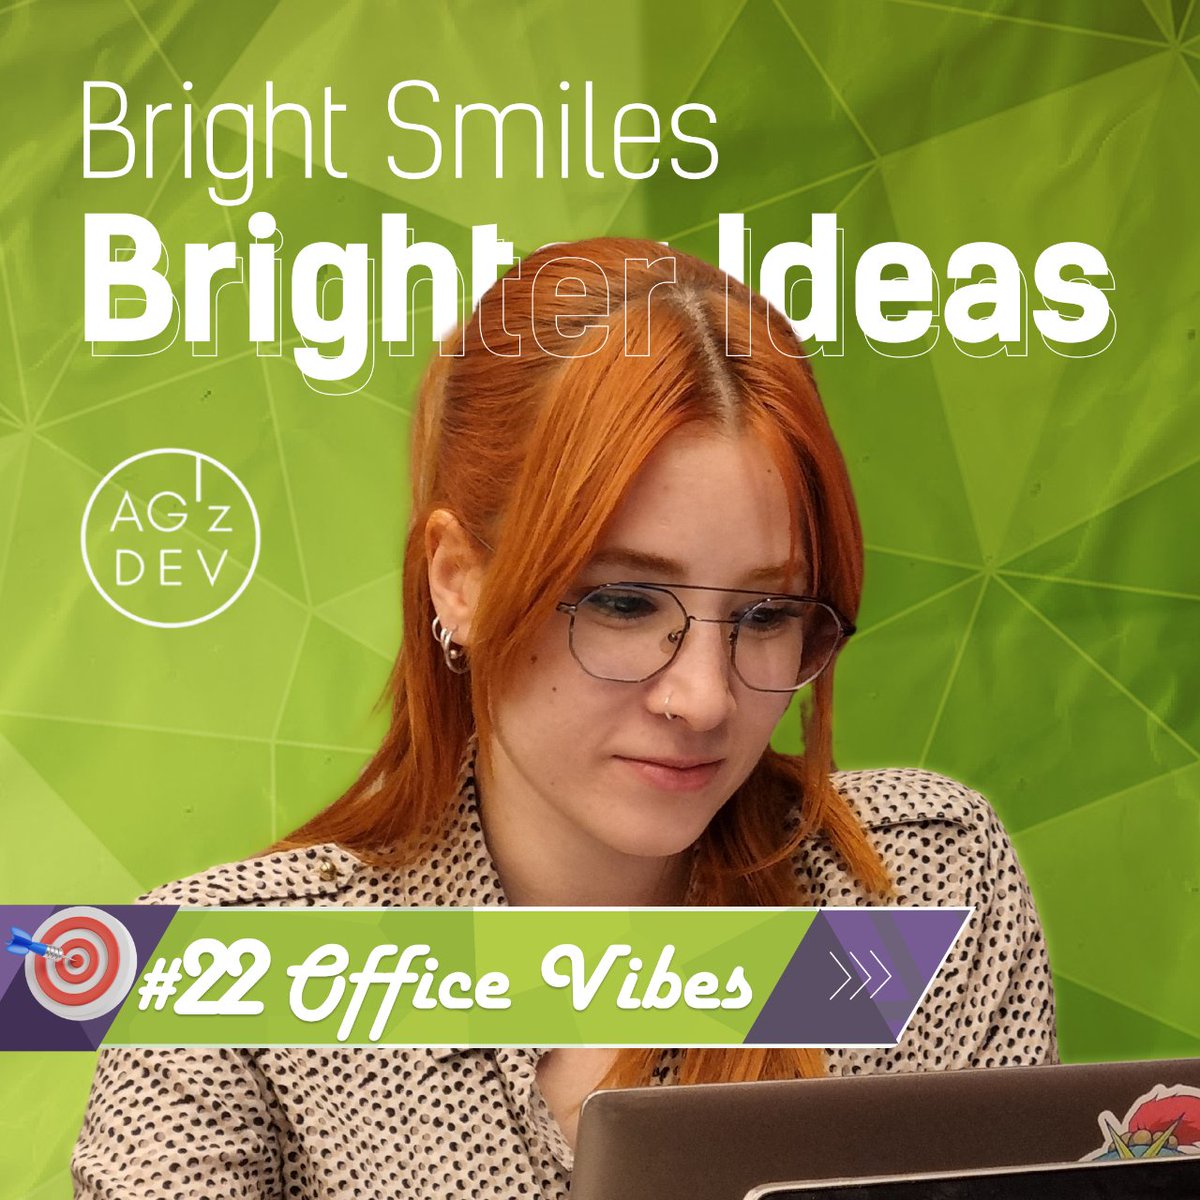 'Radiant smiles lead to luminous ideas at AG'z Dev! ✨👩‍💻 #22OfficeVibes captures the essence of innovation as our team members #CreativeSpark #JoyfulInnovation #AGzDevFamily #InspiredWorkplace #BrightIdeas'